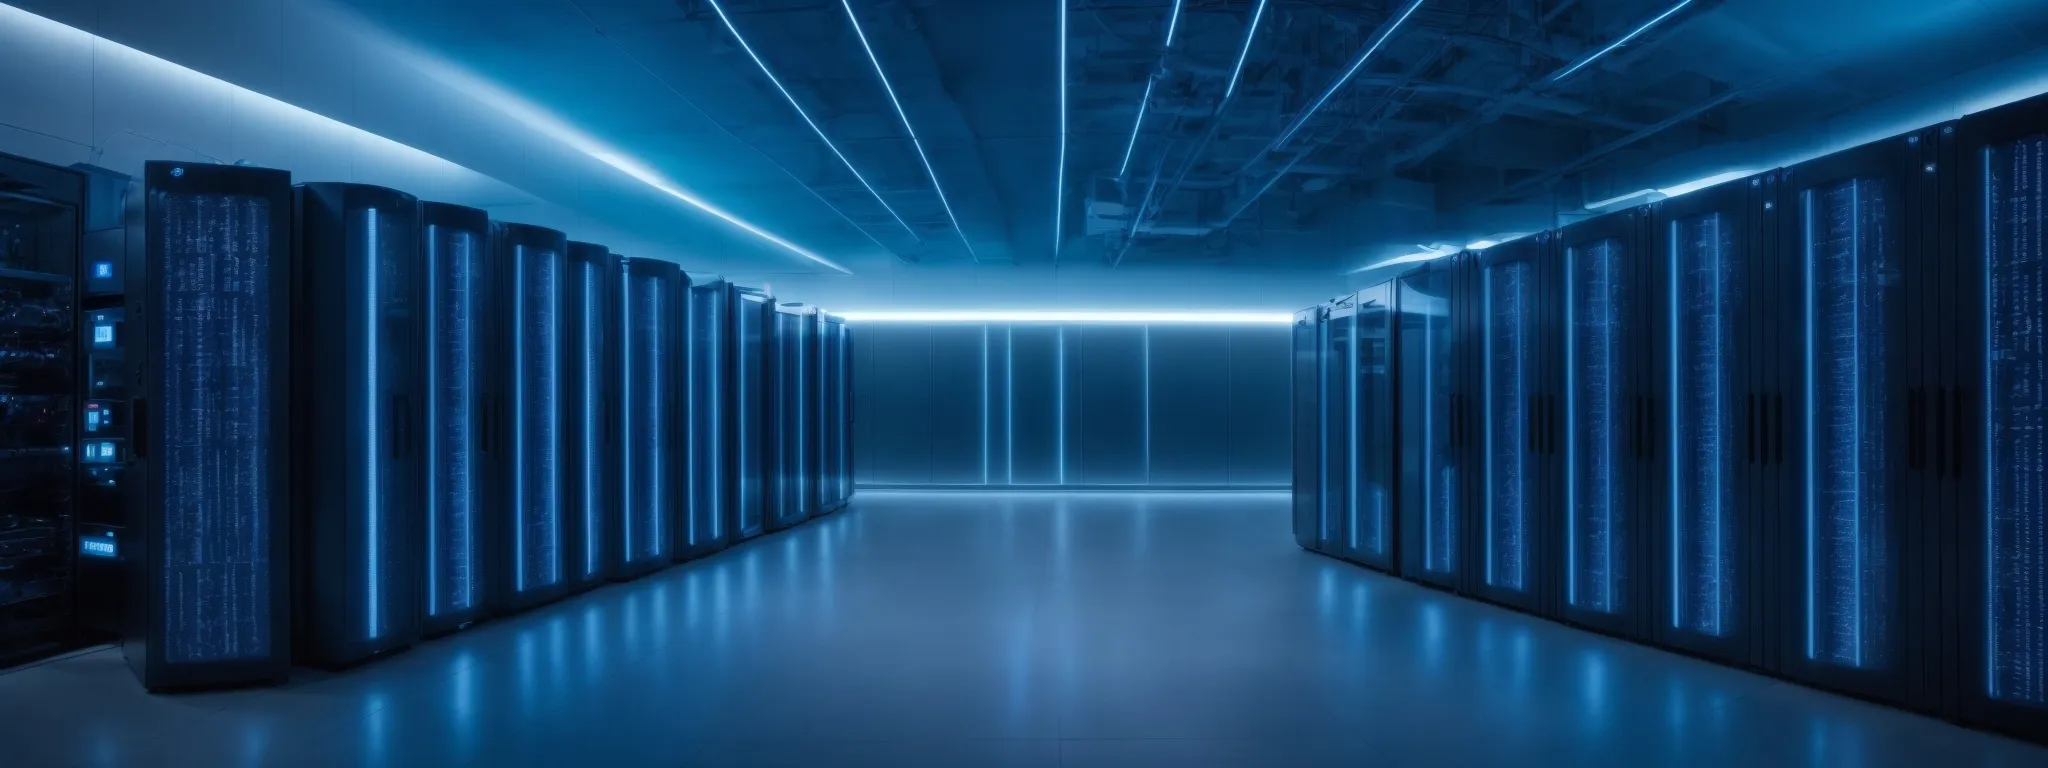 a sleek, modern data center with rows of high-tech servers emitting a soft blue glow.